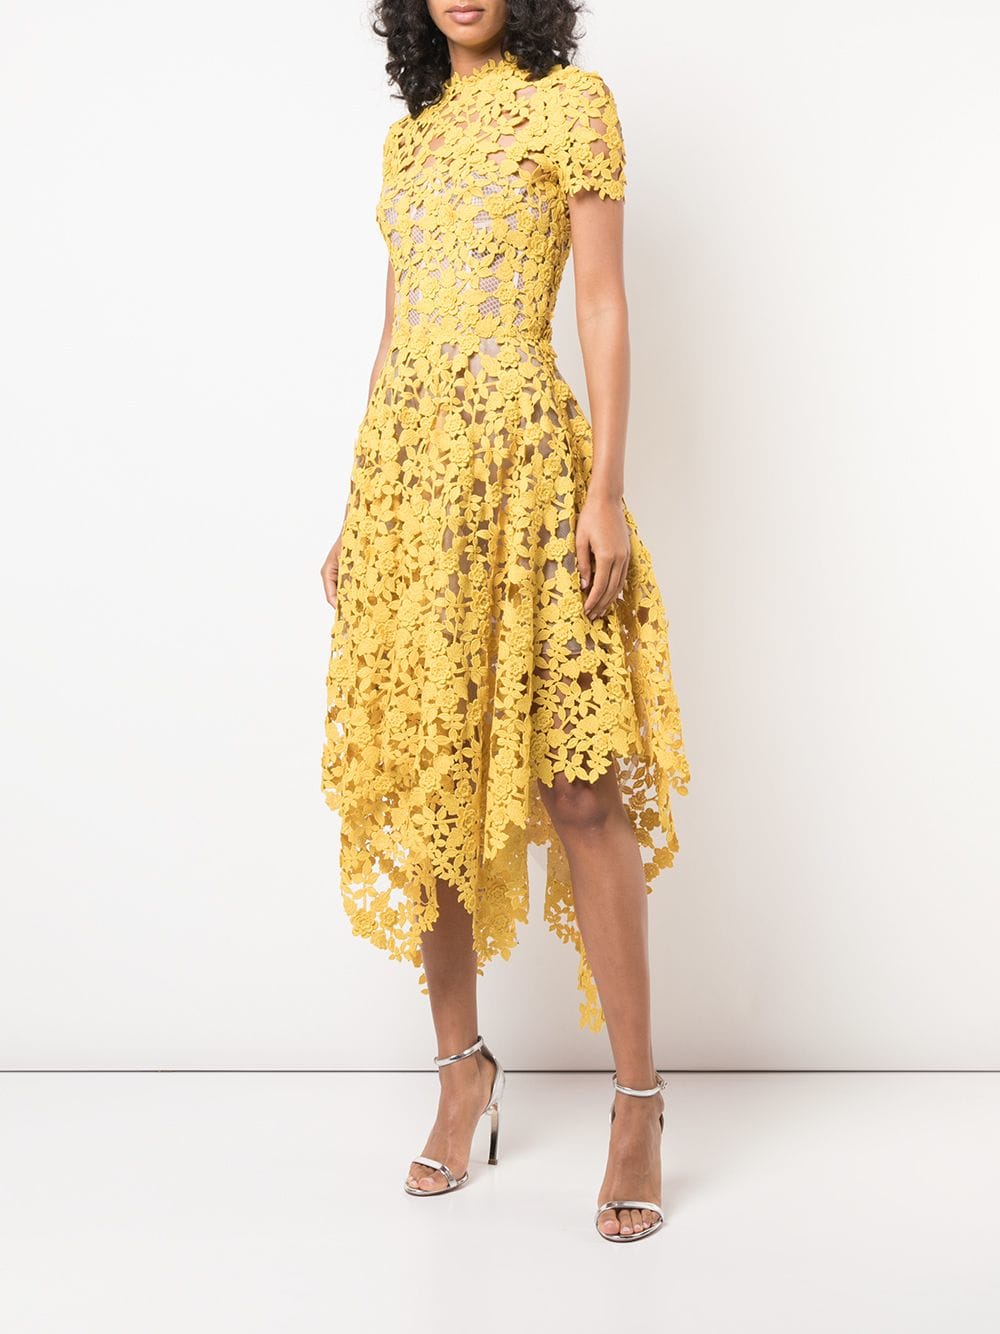 Yellow Crochet Dress for Elegant Girls – fashionarrow.com